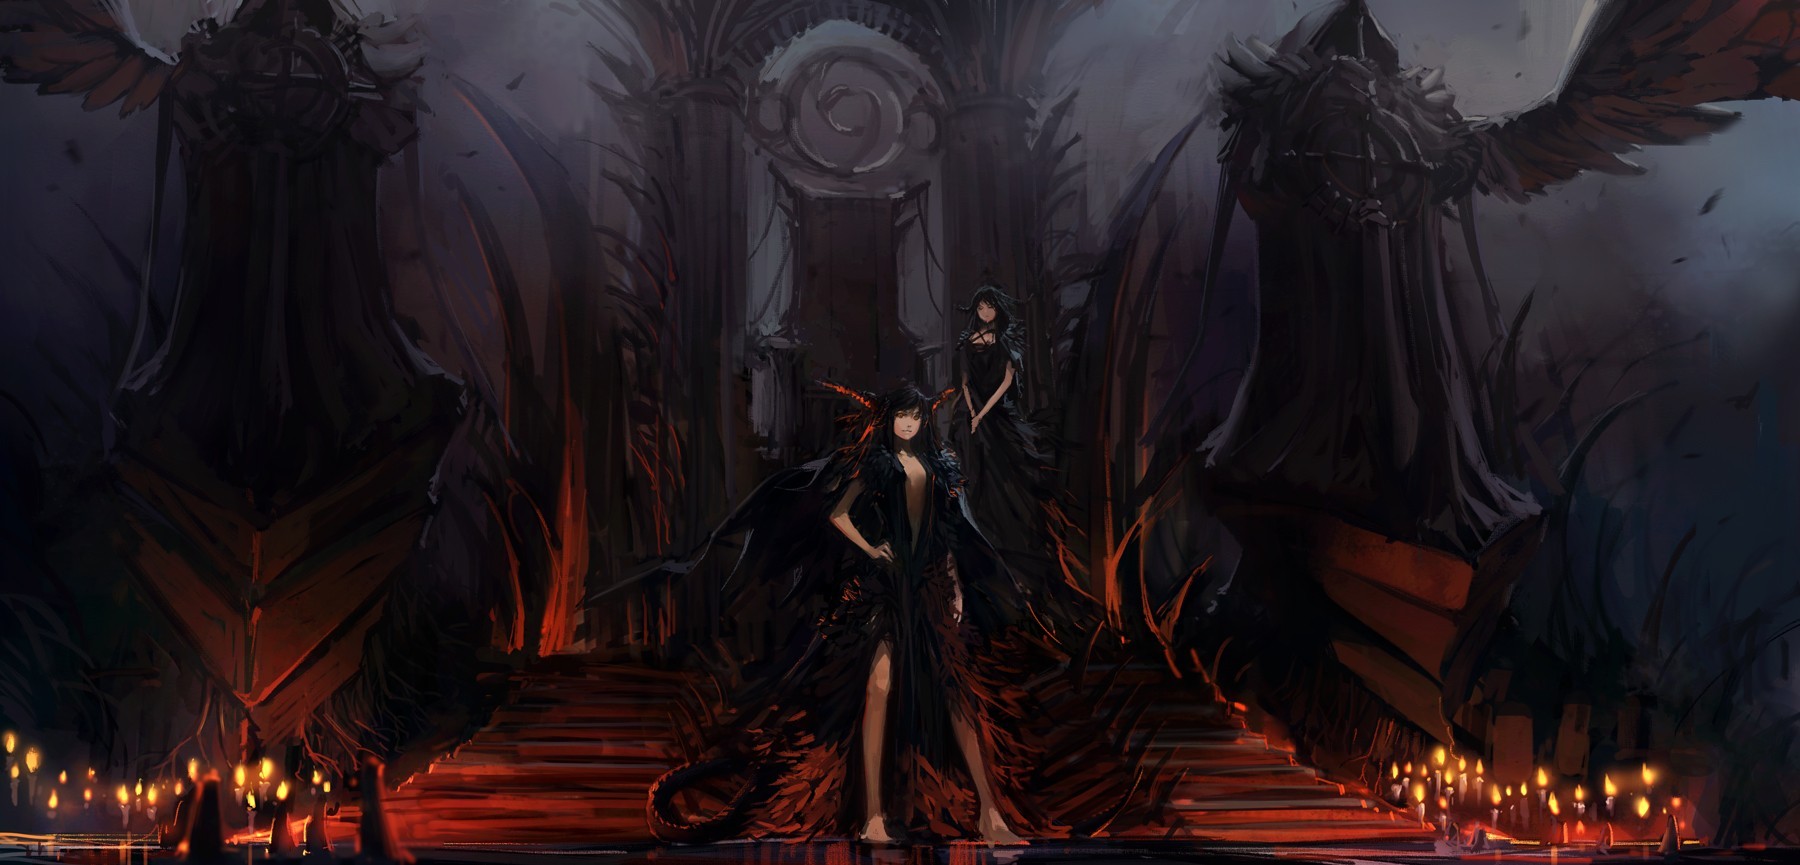 General 1800x865 fantasy art dark anime girls anime candles fantasy girl two women standing